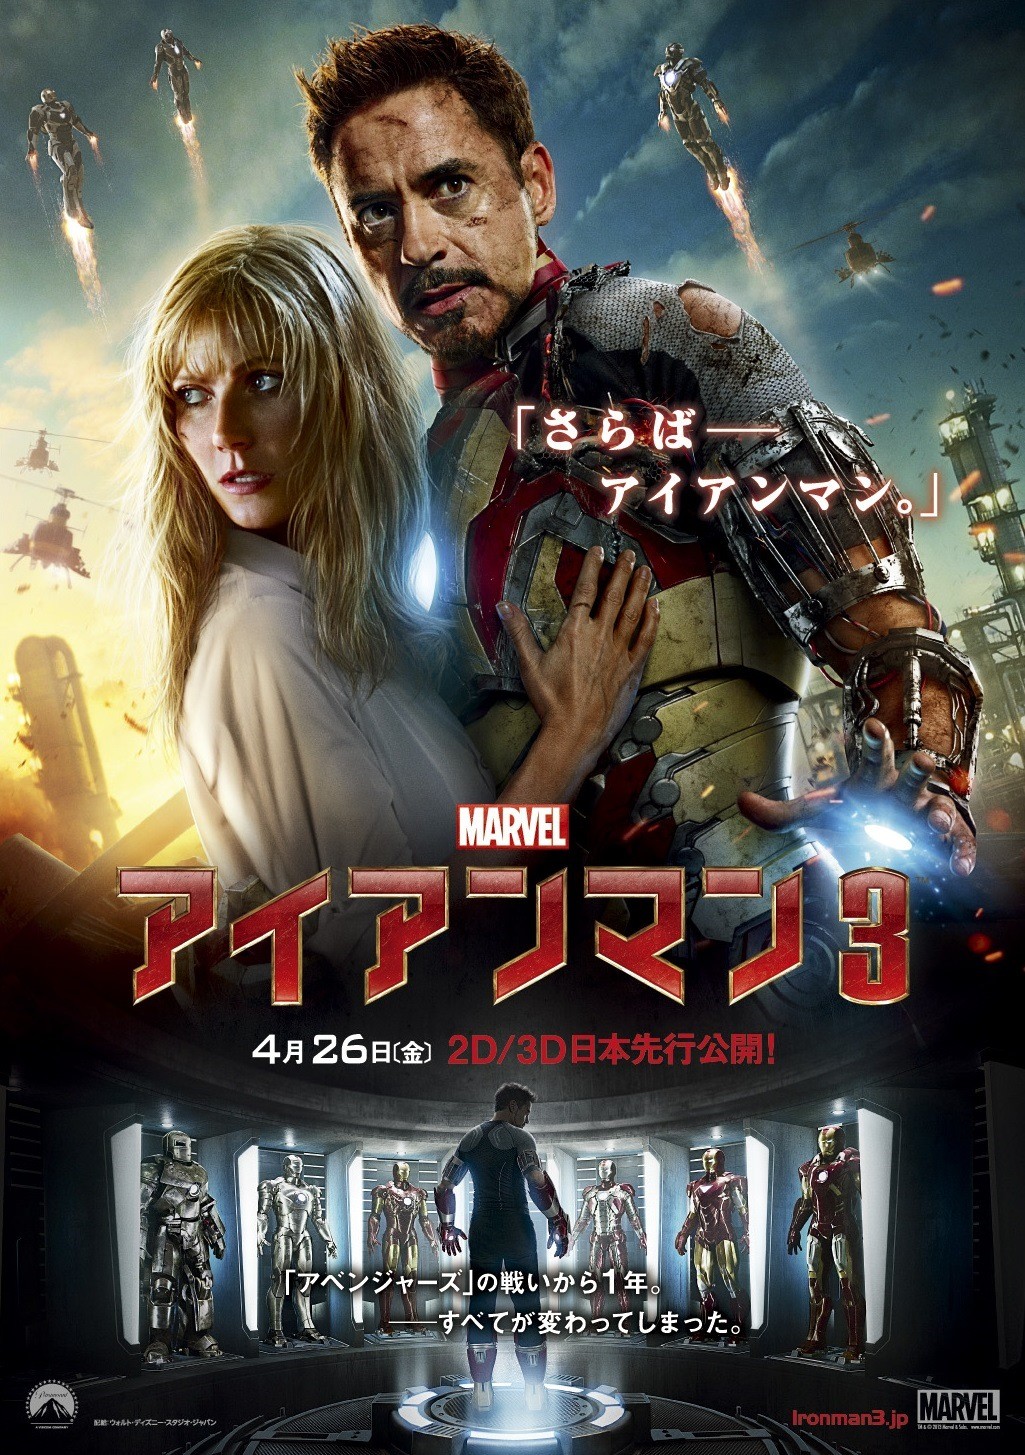 three movie poster